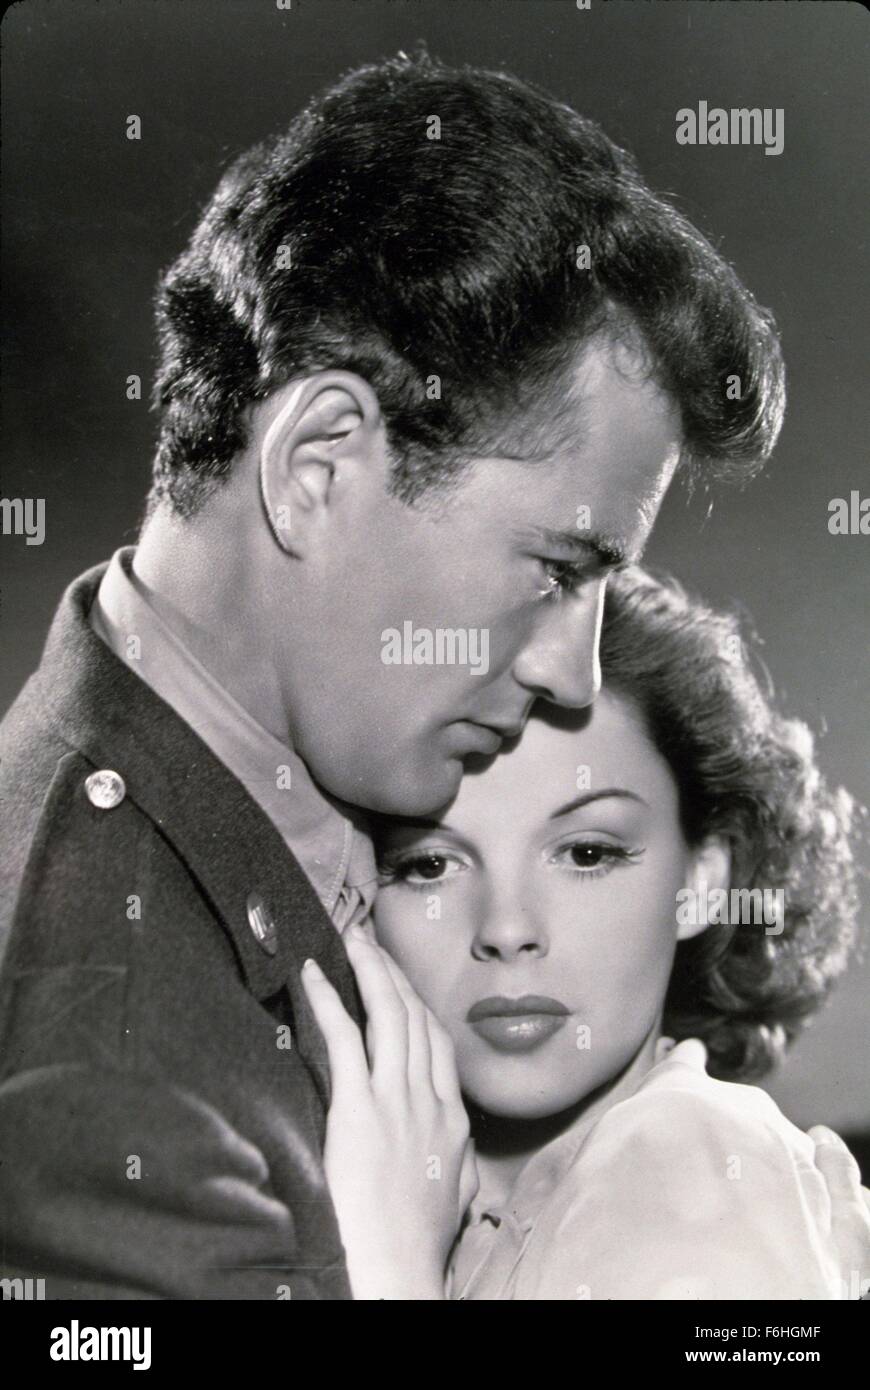 1945, Filmtitel: Uhr, Regie: VINCENTE MINNELLI, Studio: MGM, abgebildet: JUDY GARLAND, VINCENTE MINNELLI, Romantik. (Bild Kredit: SNAP) Stockfoto